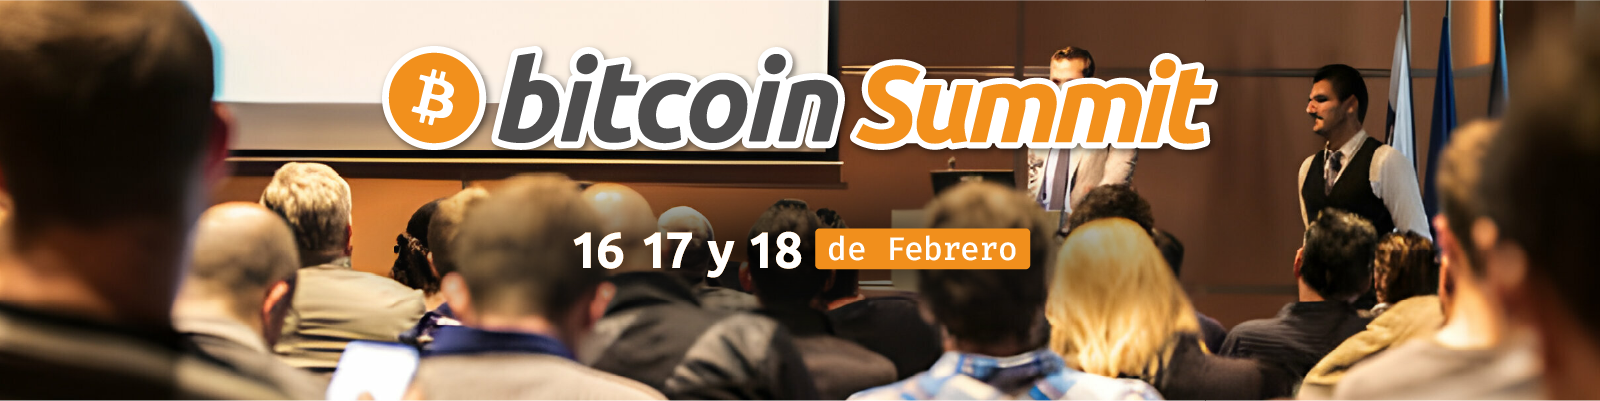 Banner formulario_Bitcoin Summit